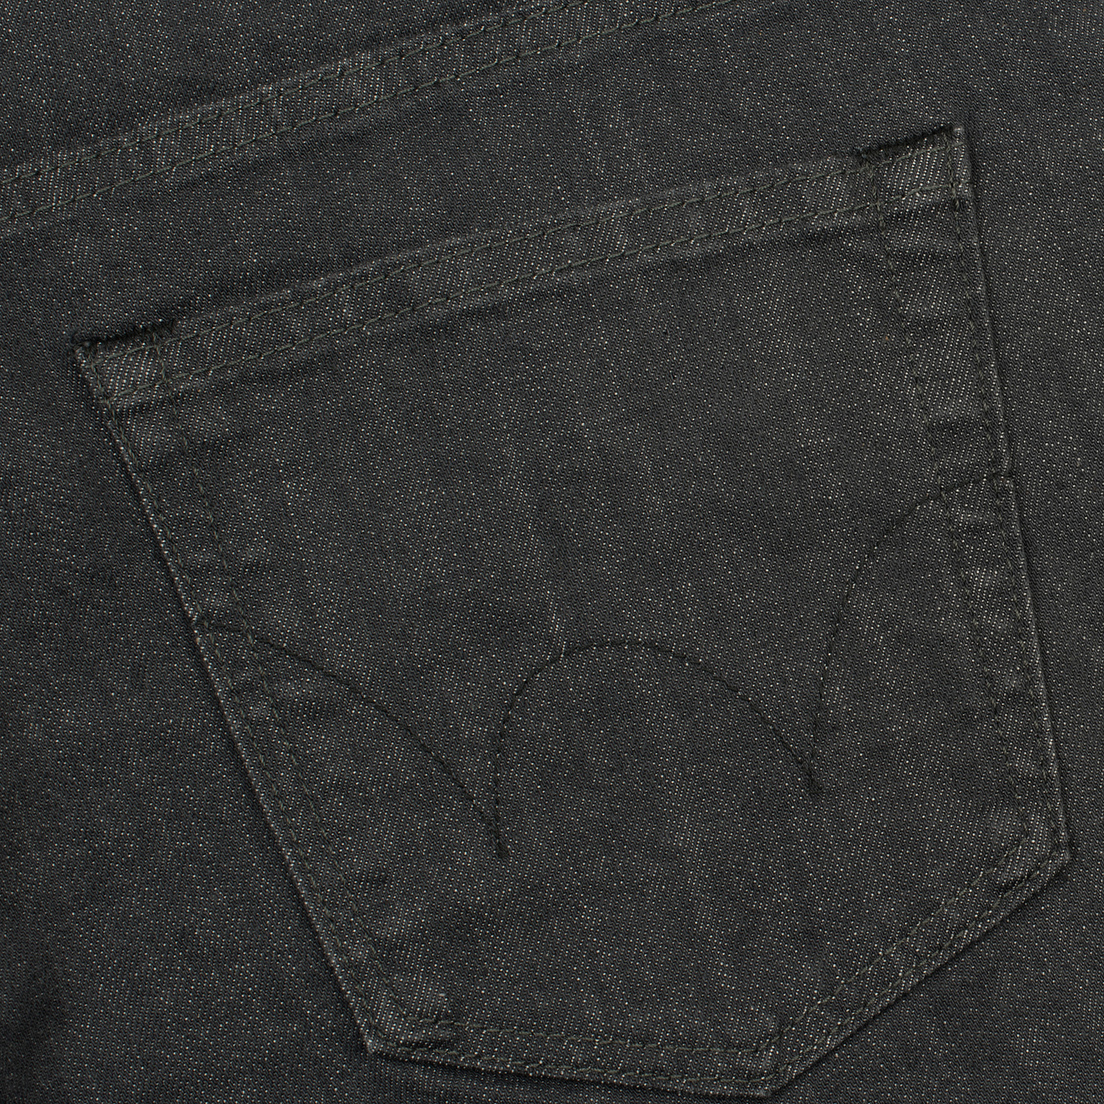 Edwin Мужские джинсы Modern Regular Tapered Grey Japanese Stretch Denim